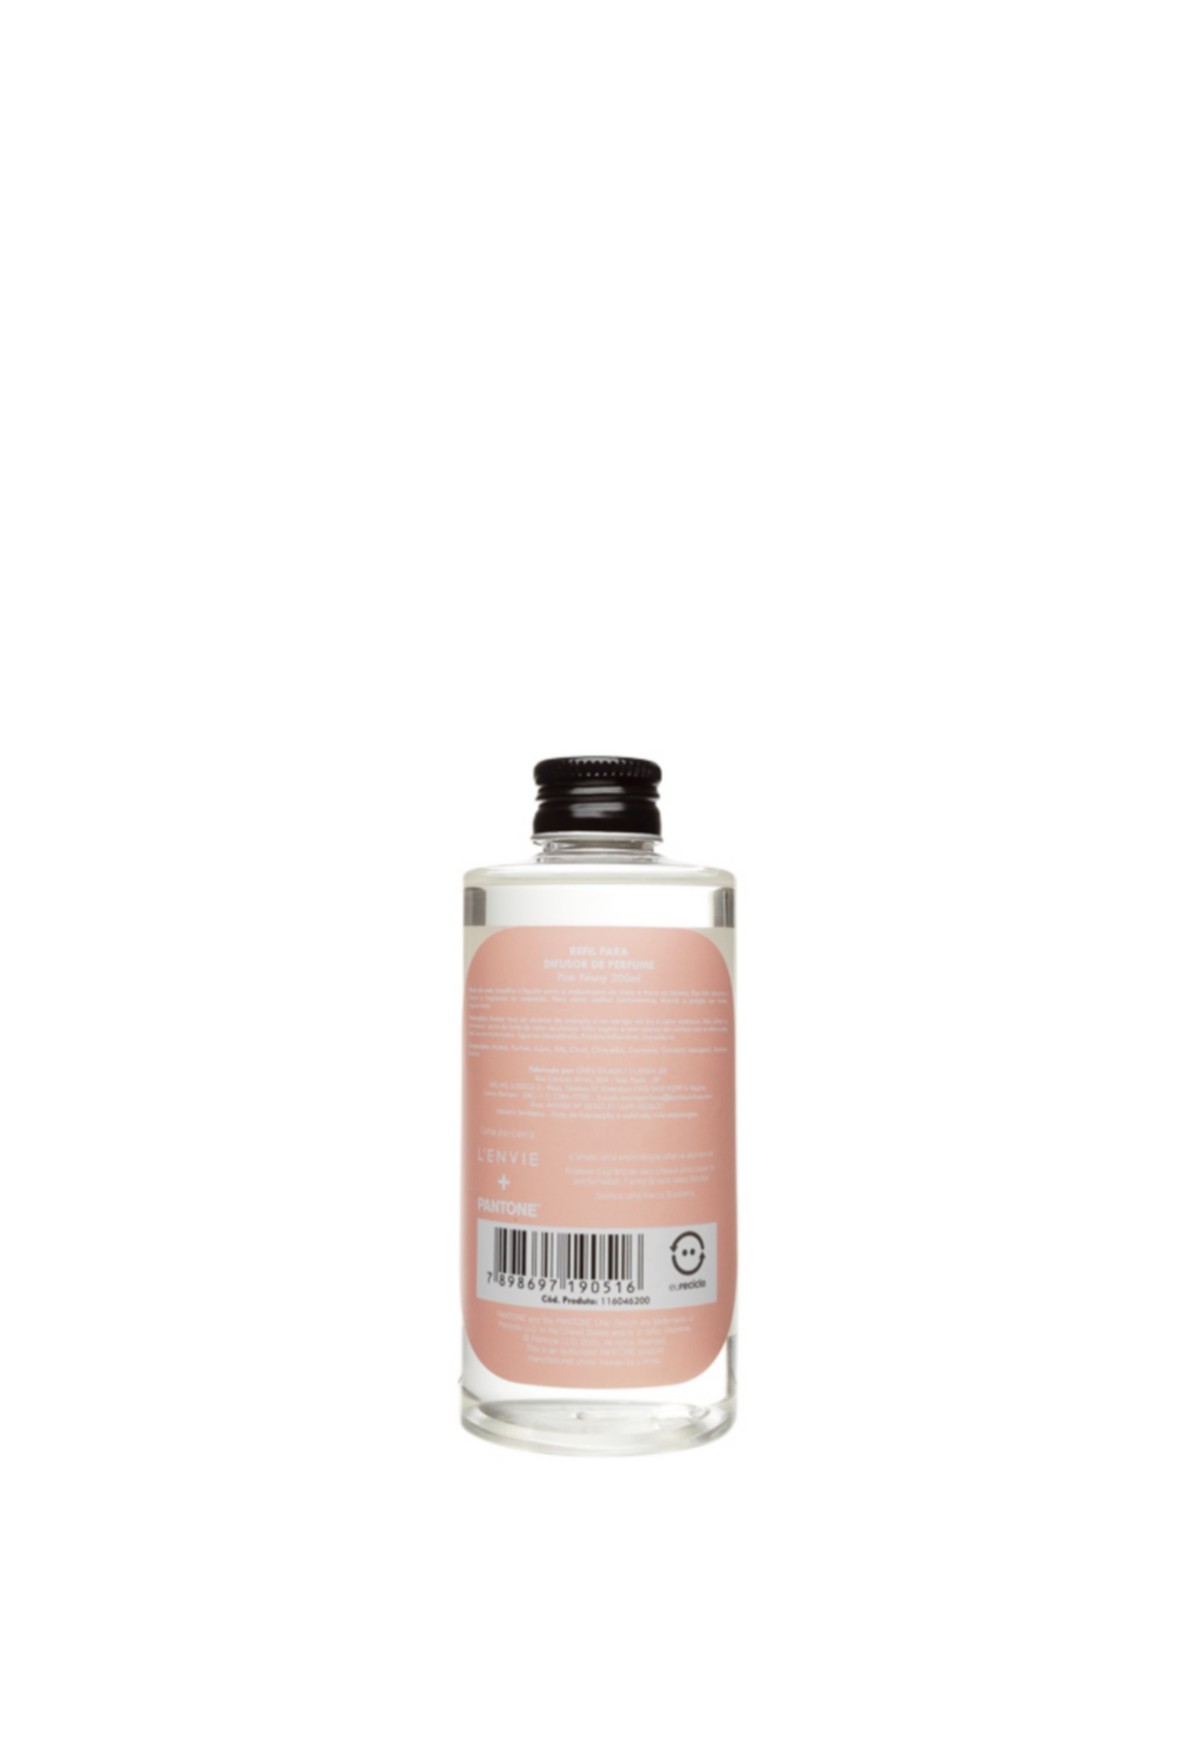 Refil Difusor de Perfume | Pink Peony - Pantone